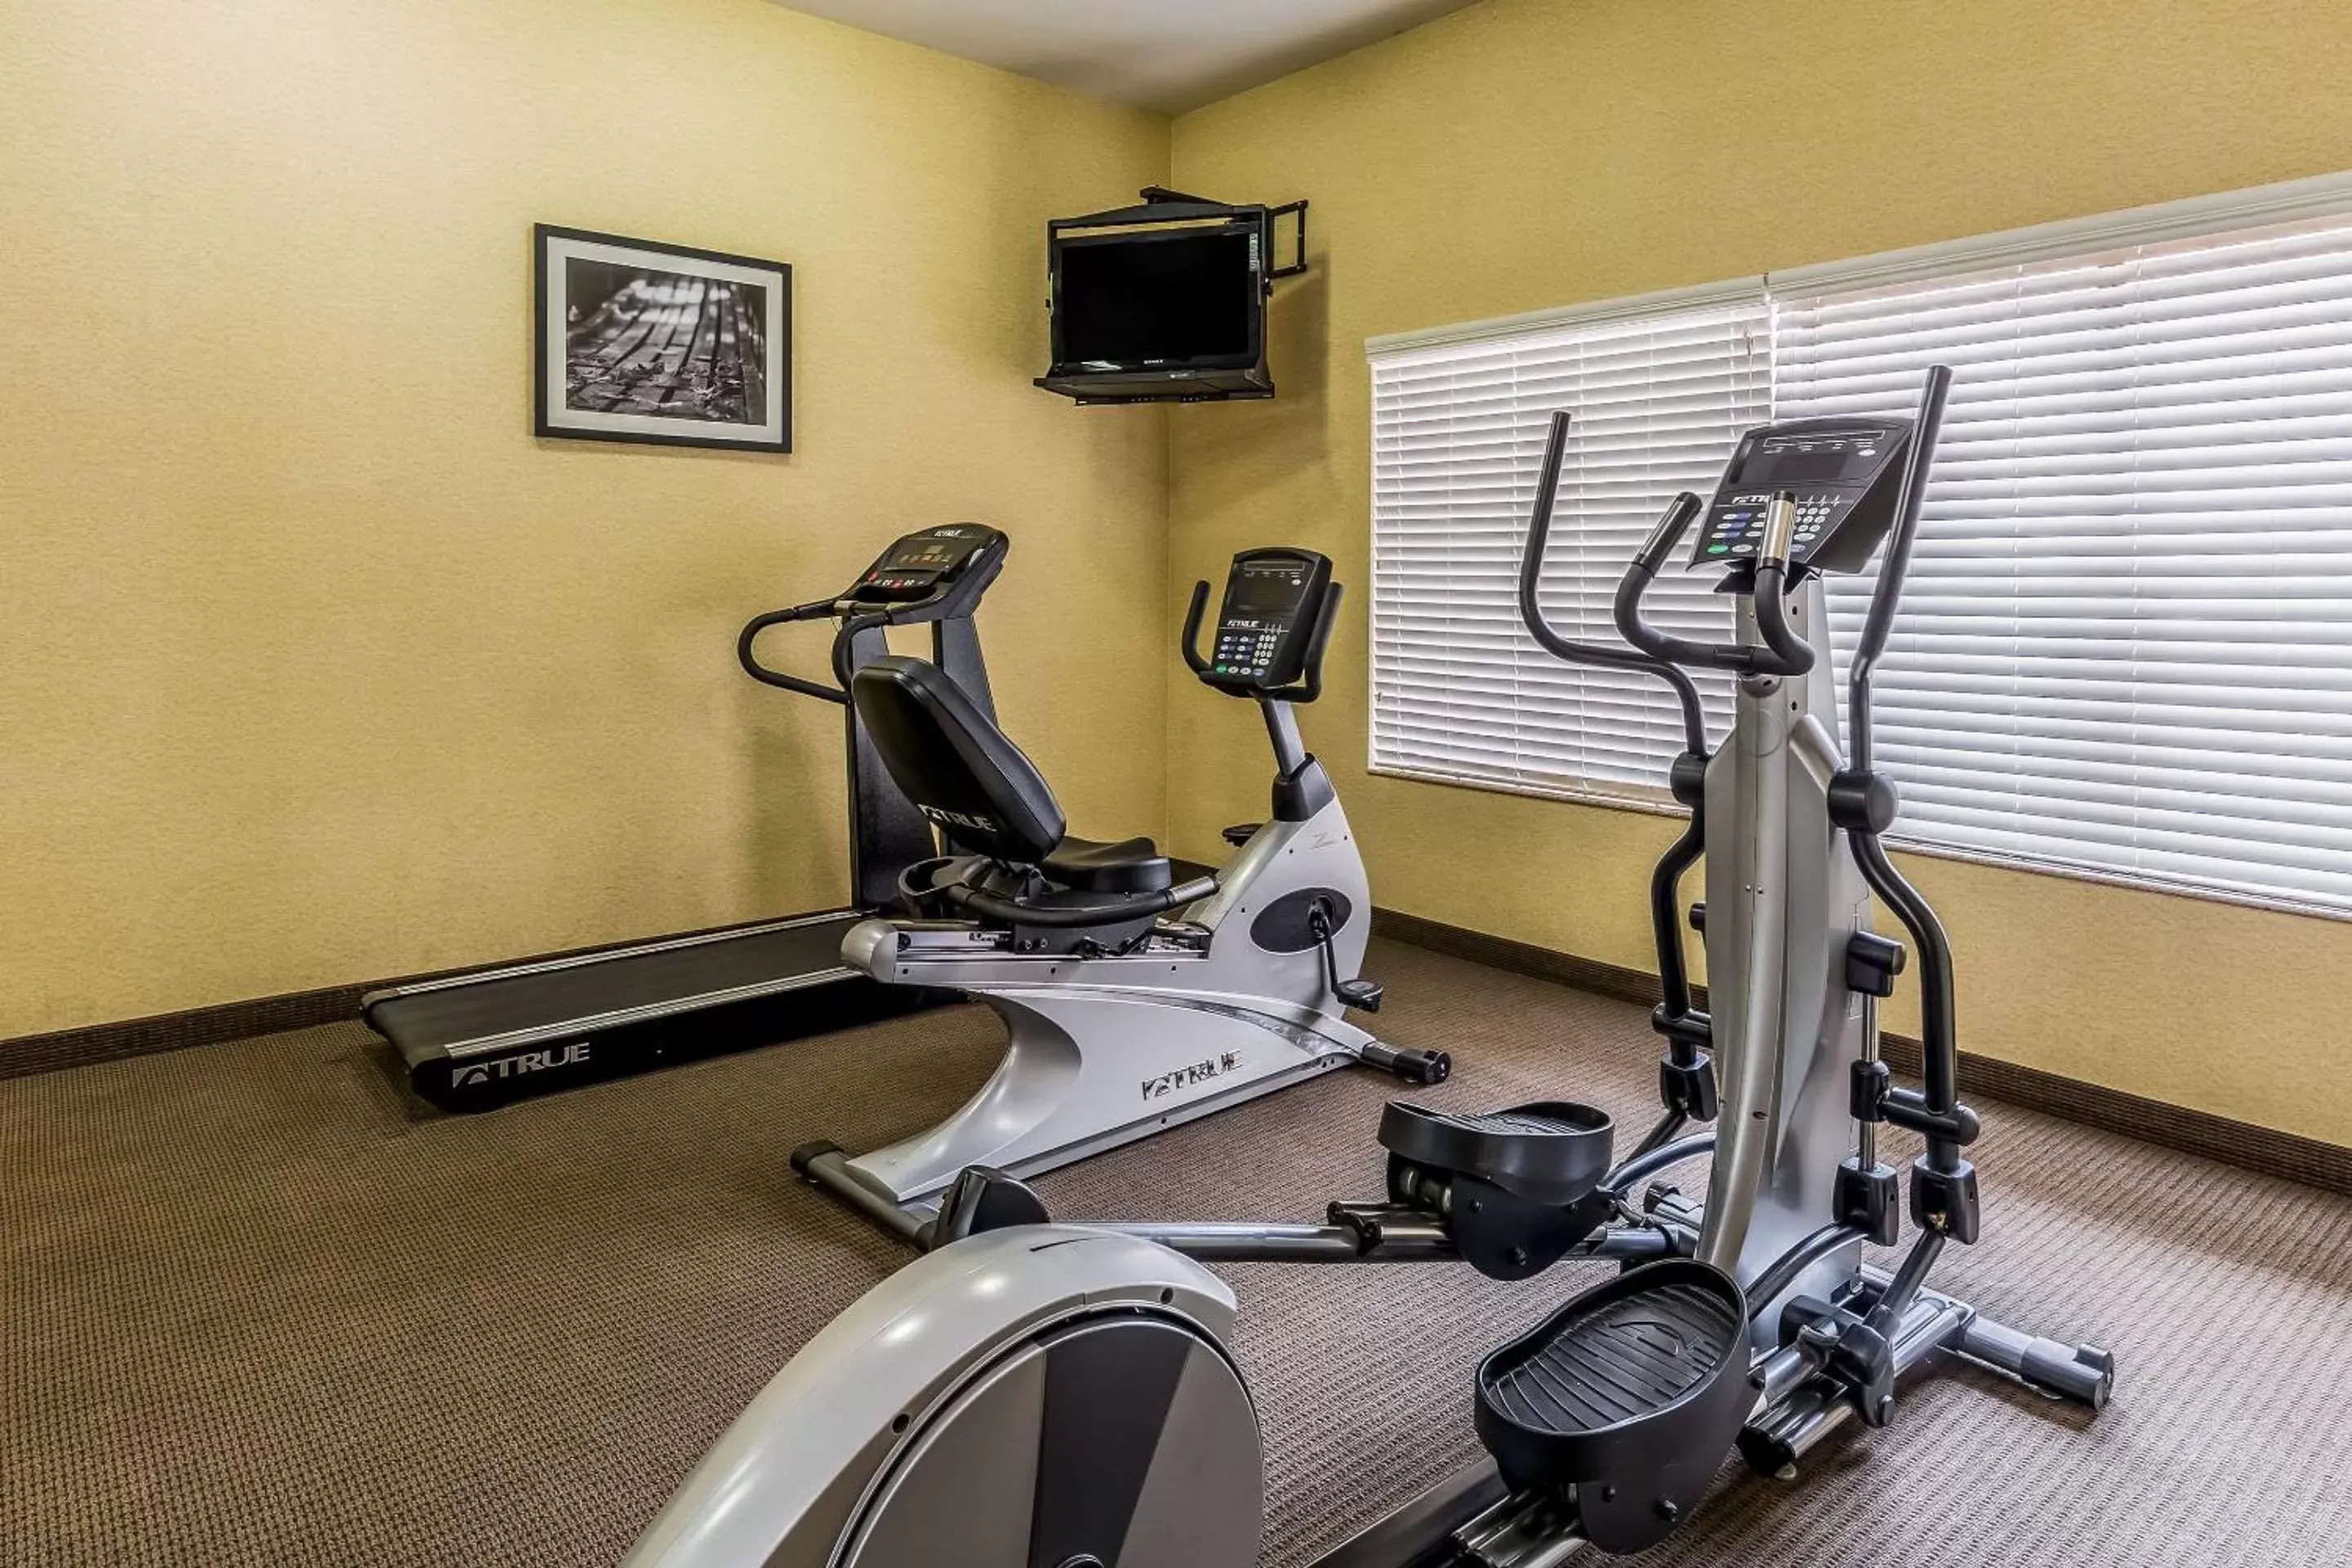 Fitness centre/facilities, Fitness Center/Facilities in Sleep Inn & Suites Stafford